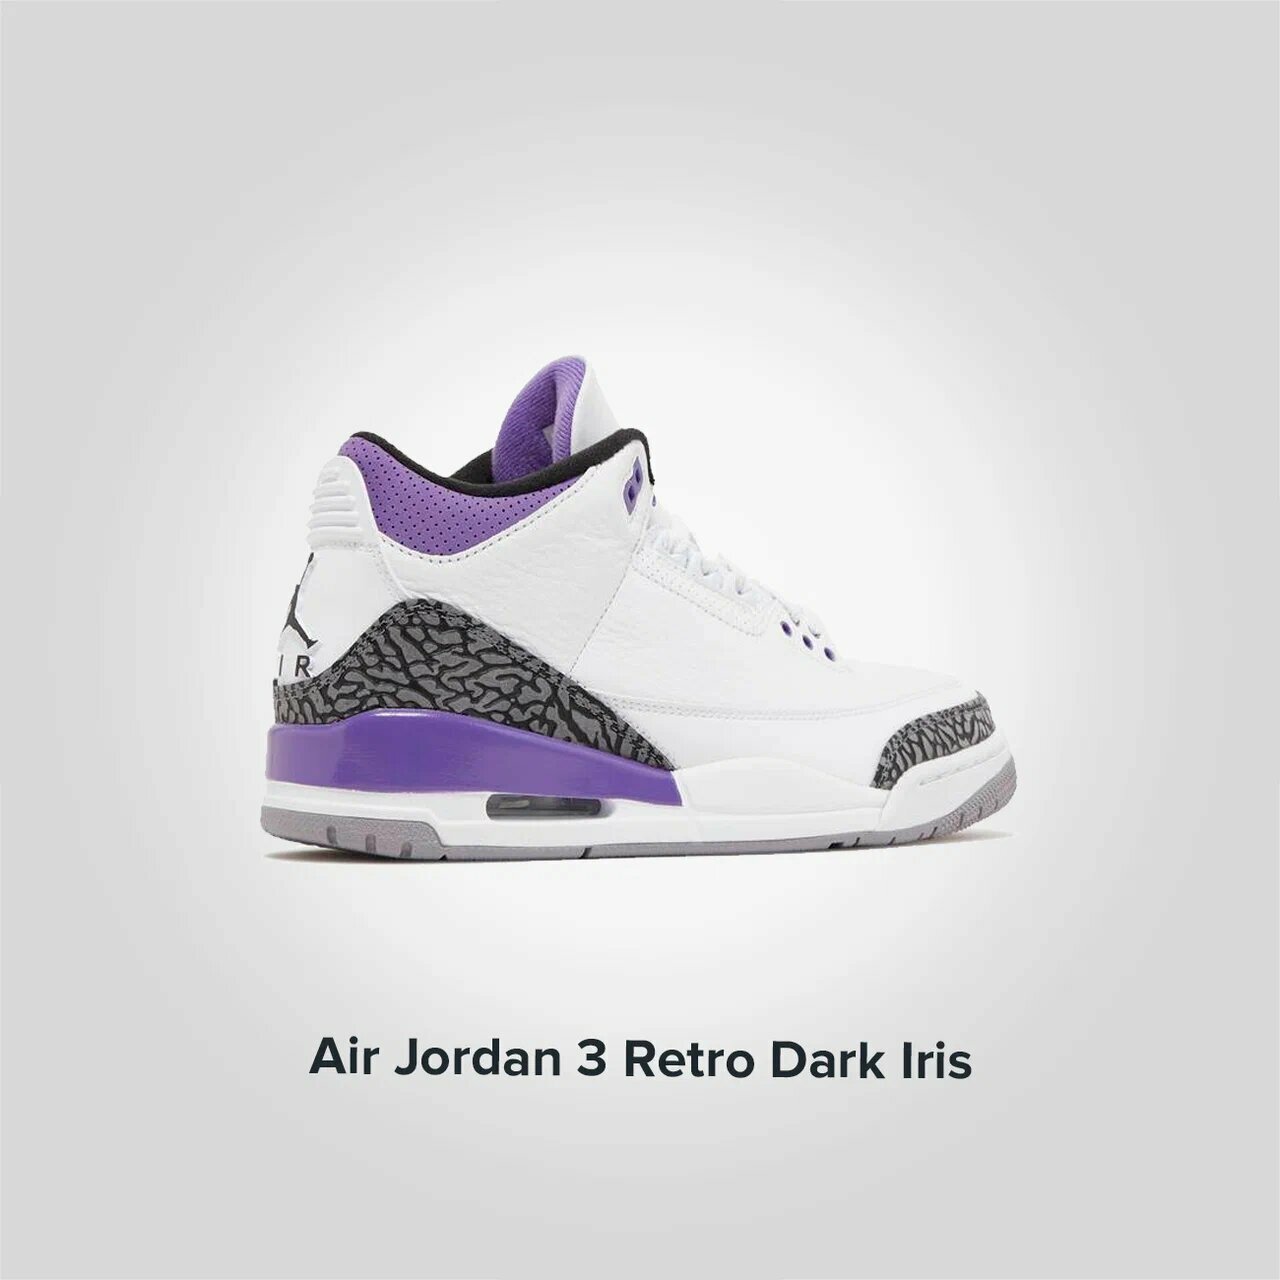 Jordan 3 Retro Dark Iris